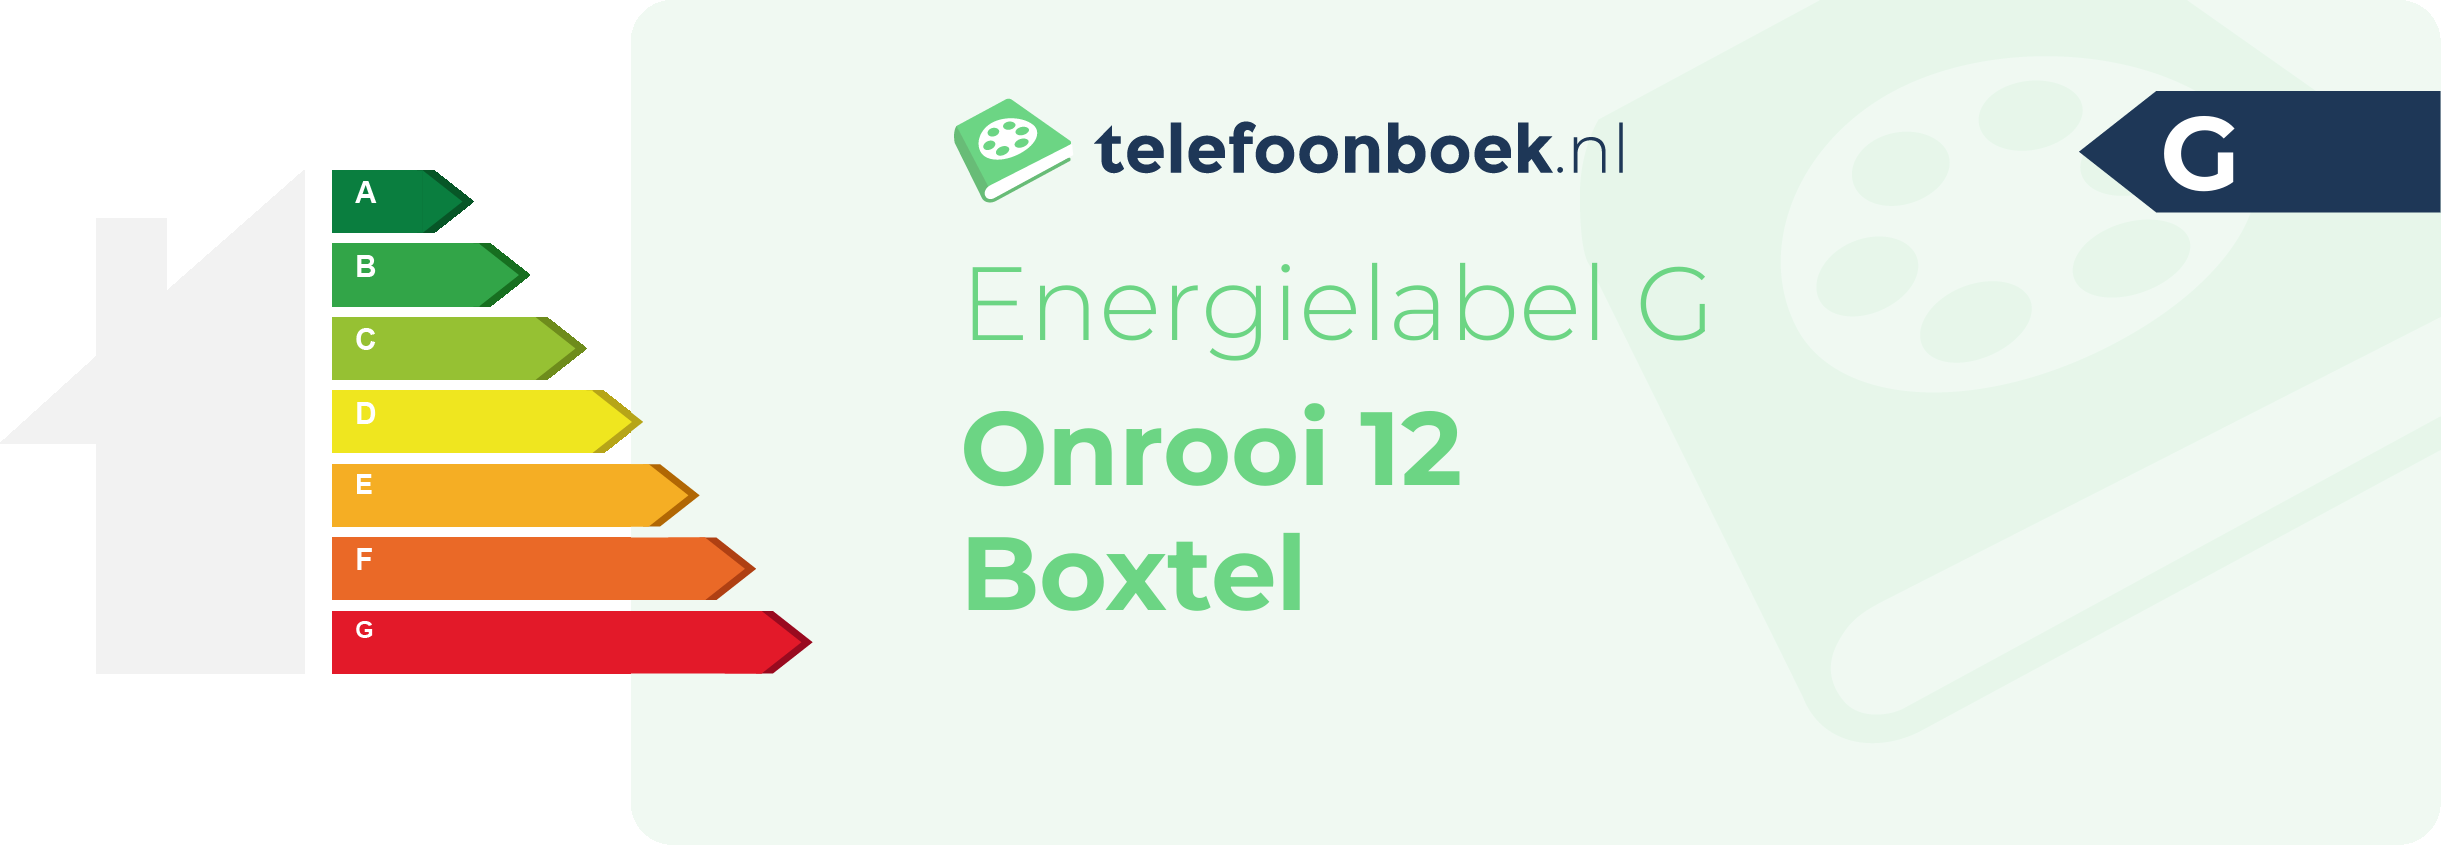 Energielabel Onrooi 12 Boxtel